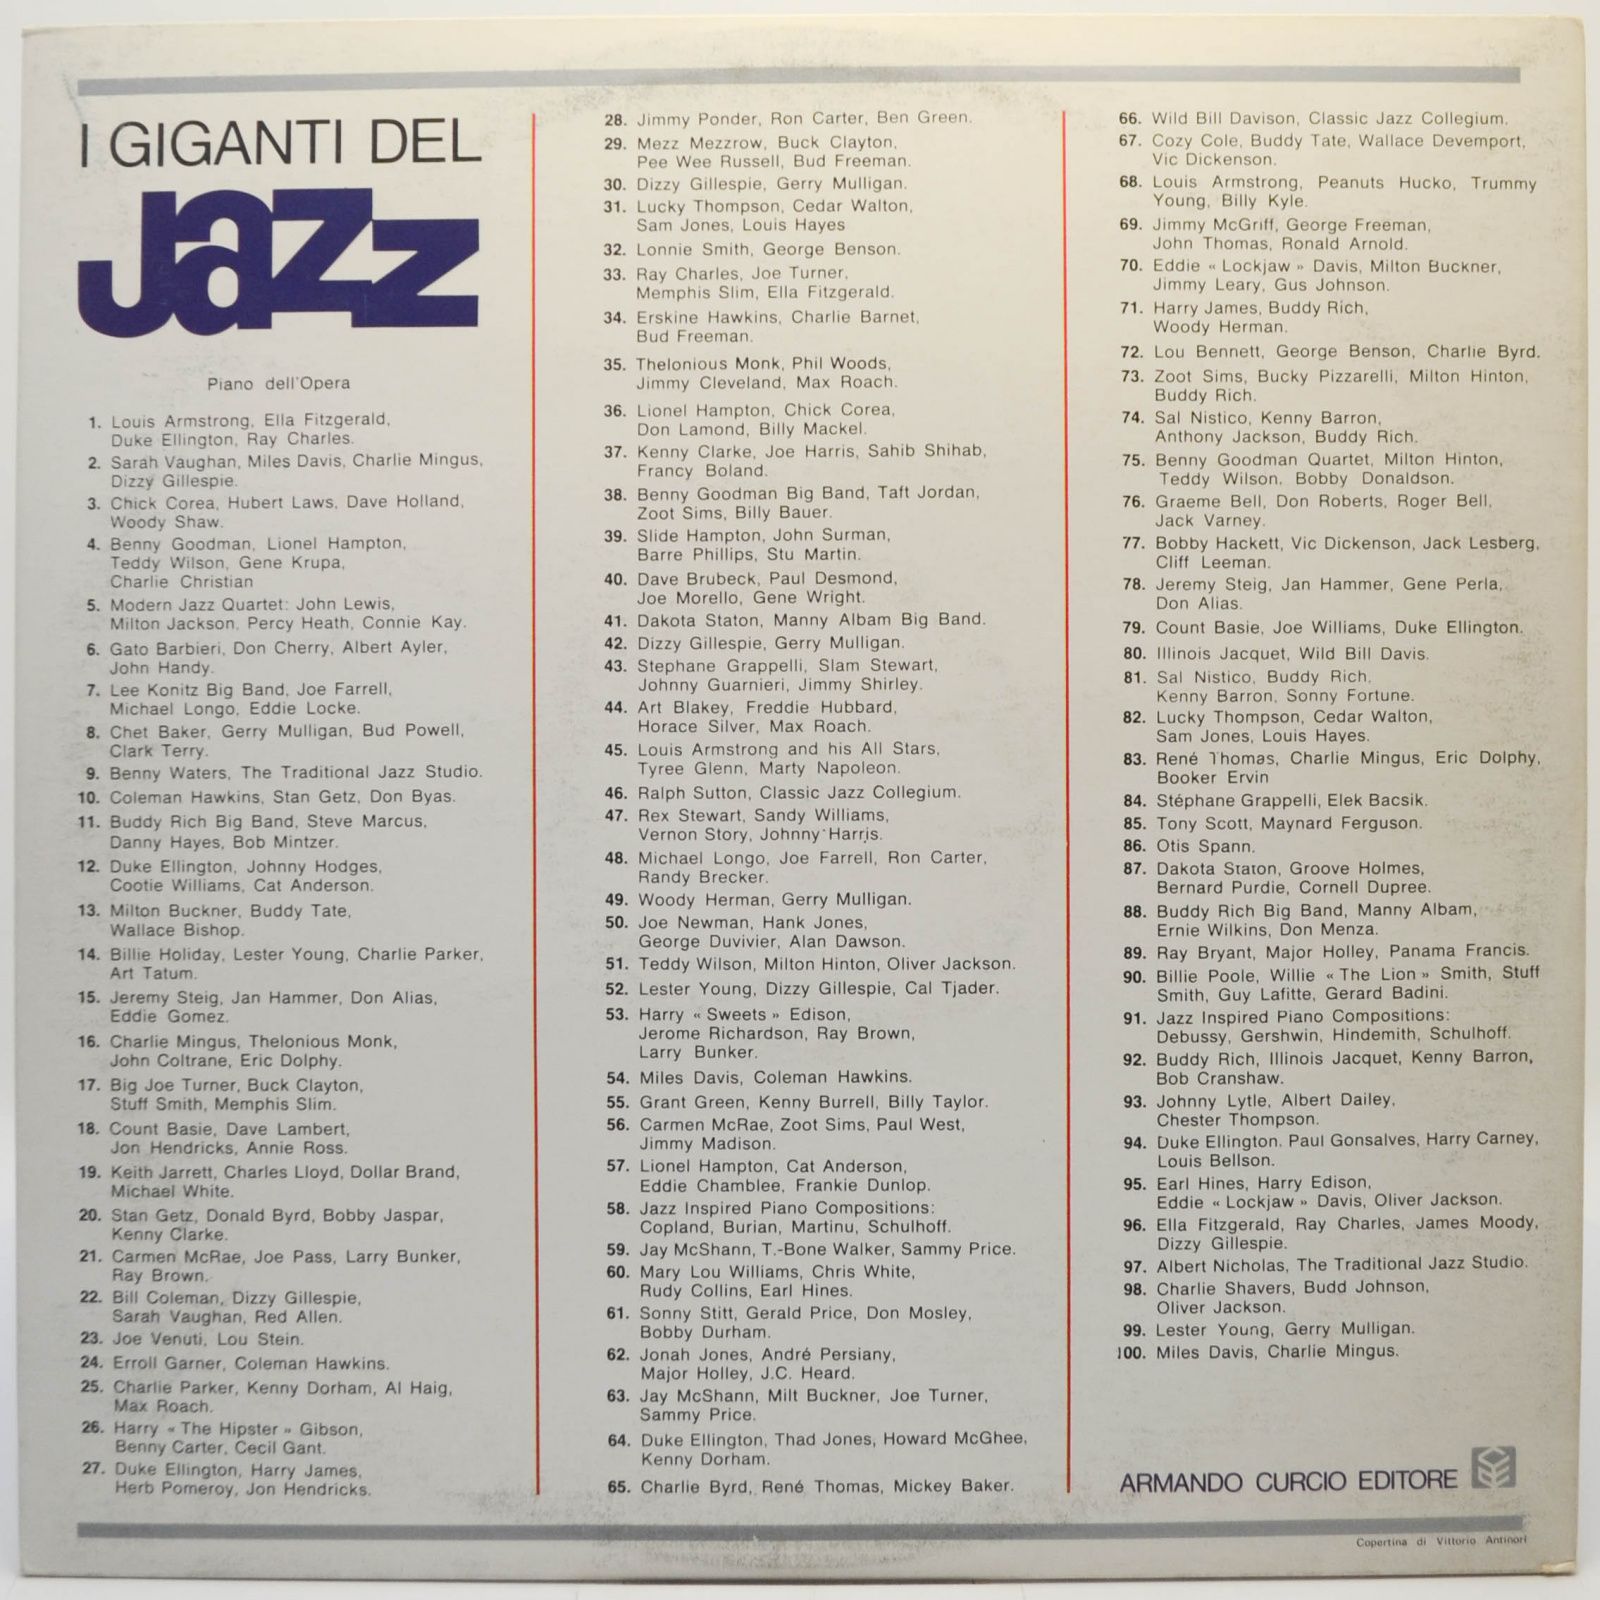 Duke Ellington, Thad Jones, Kenny Dorham, Howard McGhee — Europa Jazz, 1981